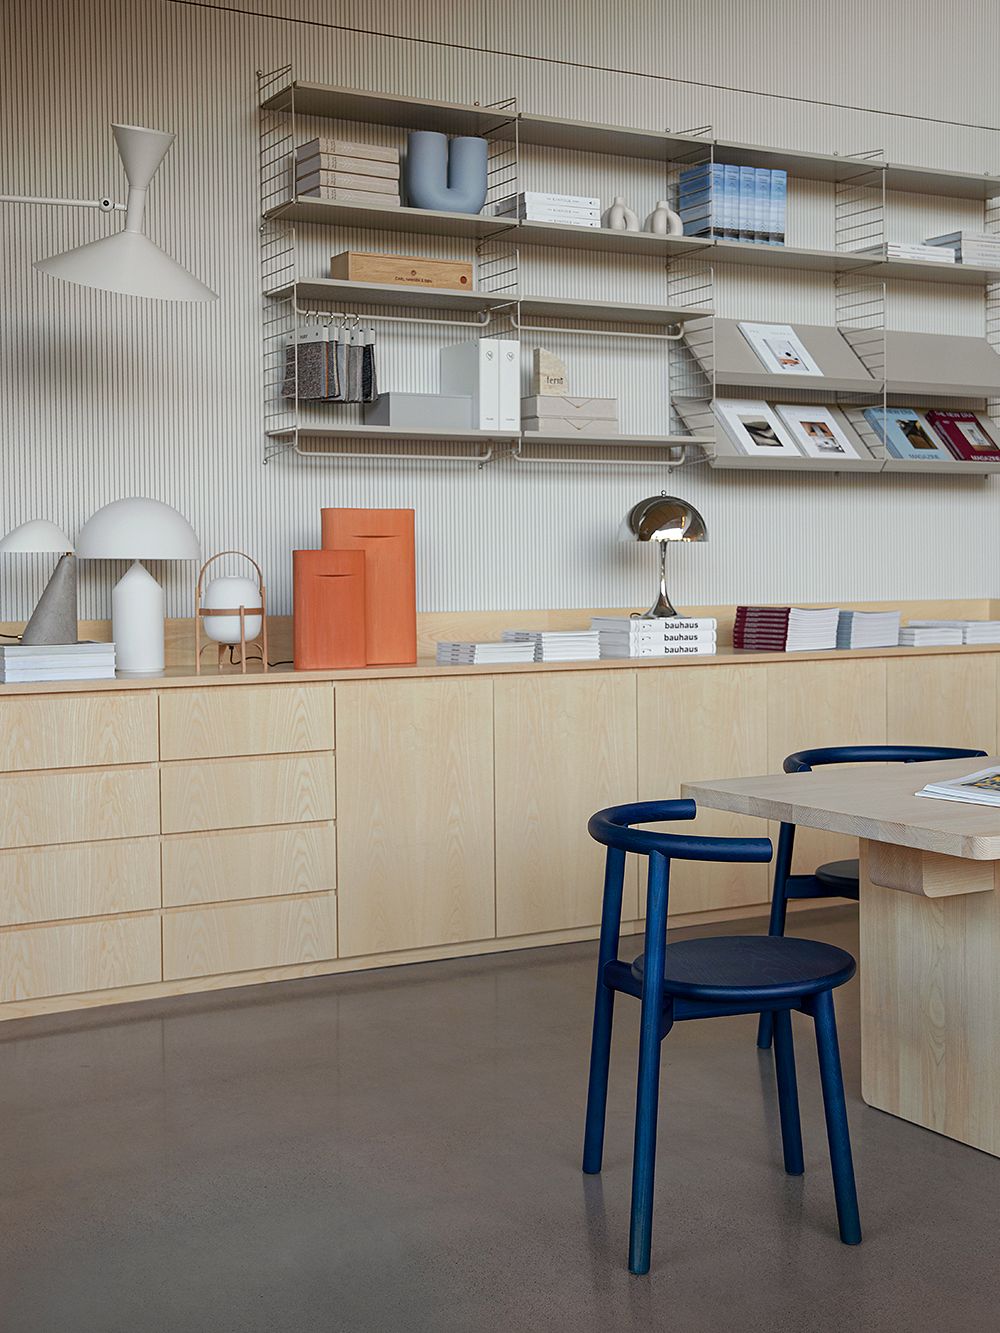 Finnish Design Shopin showroom